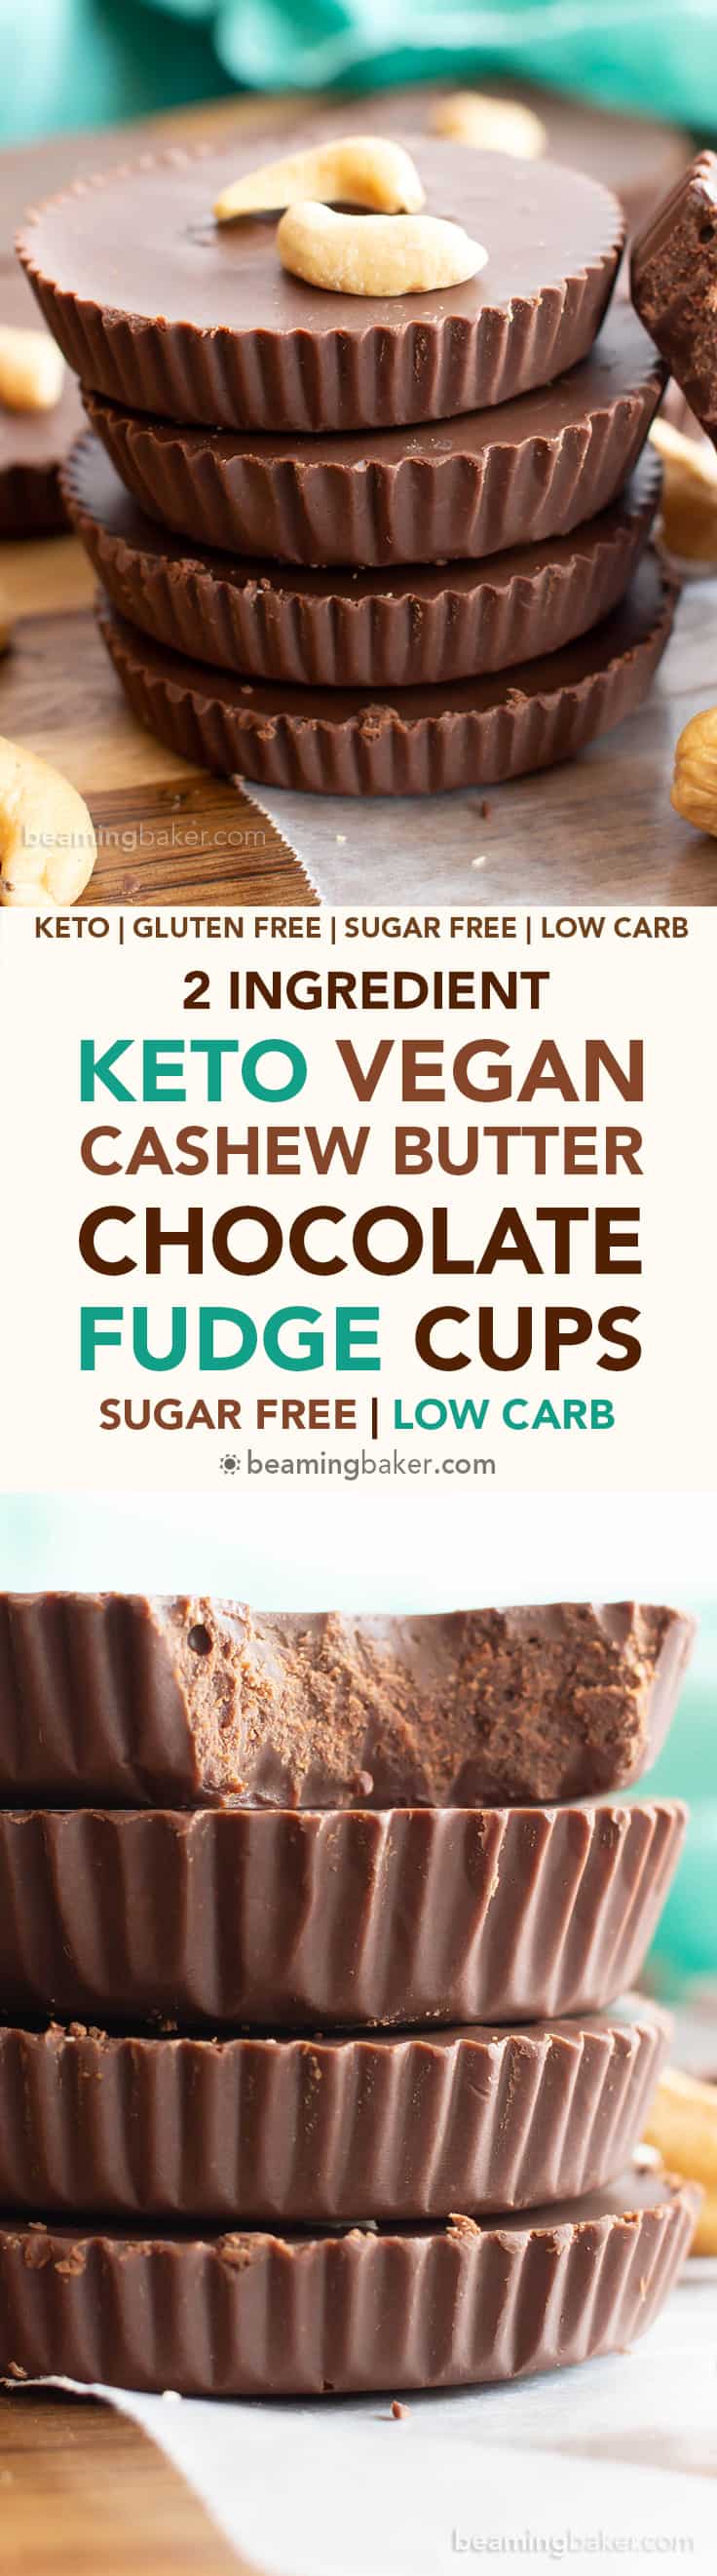 Low Carb Chocolate Fudge Cups Recipe: easy keto chocolate fudge cups made with cashew butter! The best Keto fudge recipe—low carb fudge cups bursting with rich chocolate flavor. #LowCarb #Keto #SugarFree #DairyFree | Recipe at BeamingBaker.com